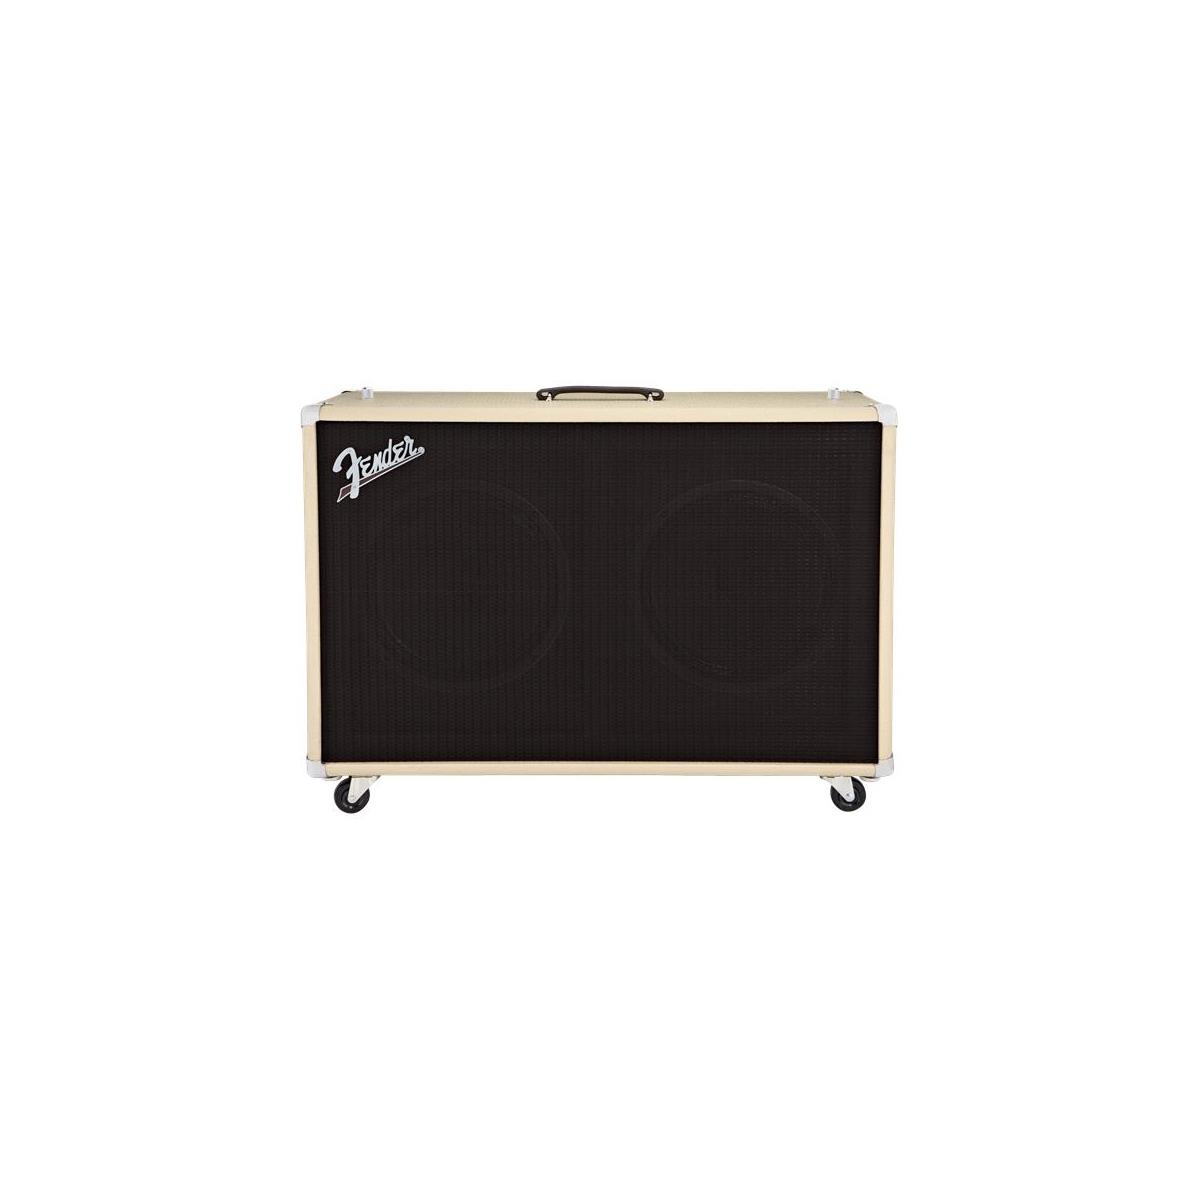 Image of Fender Blonde Super-Sonic 60 212 Enclosure Amplifier